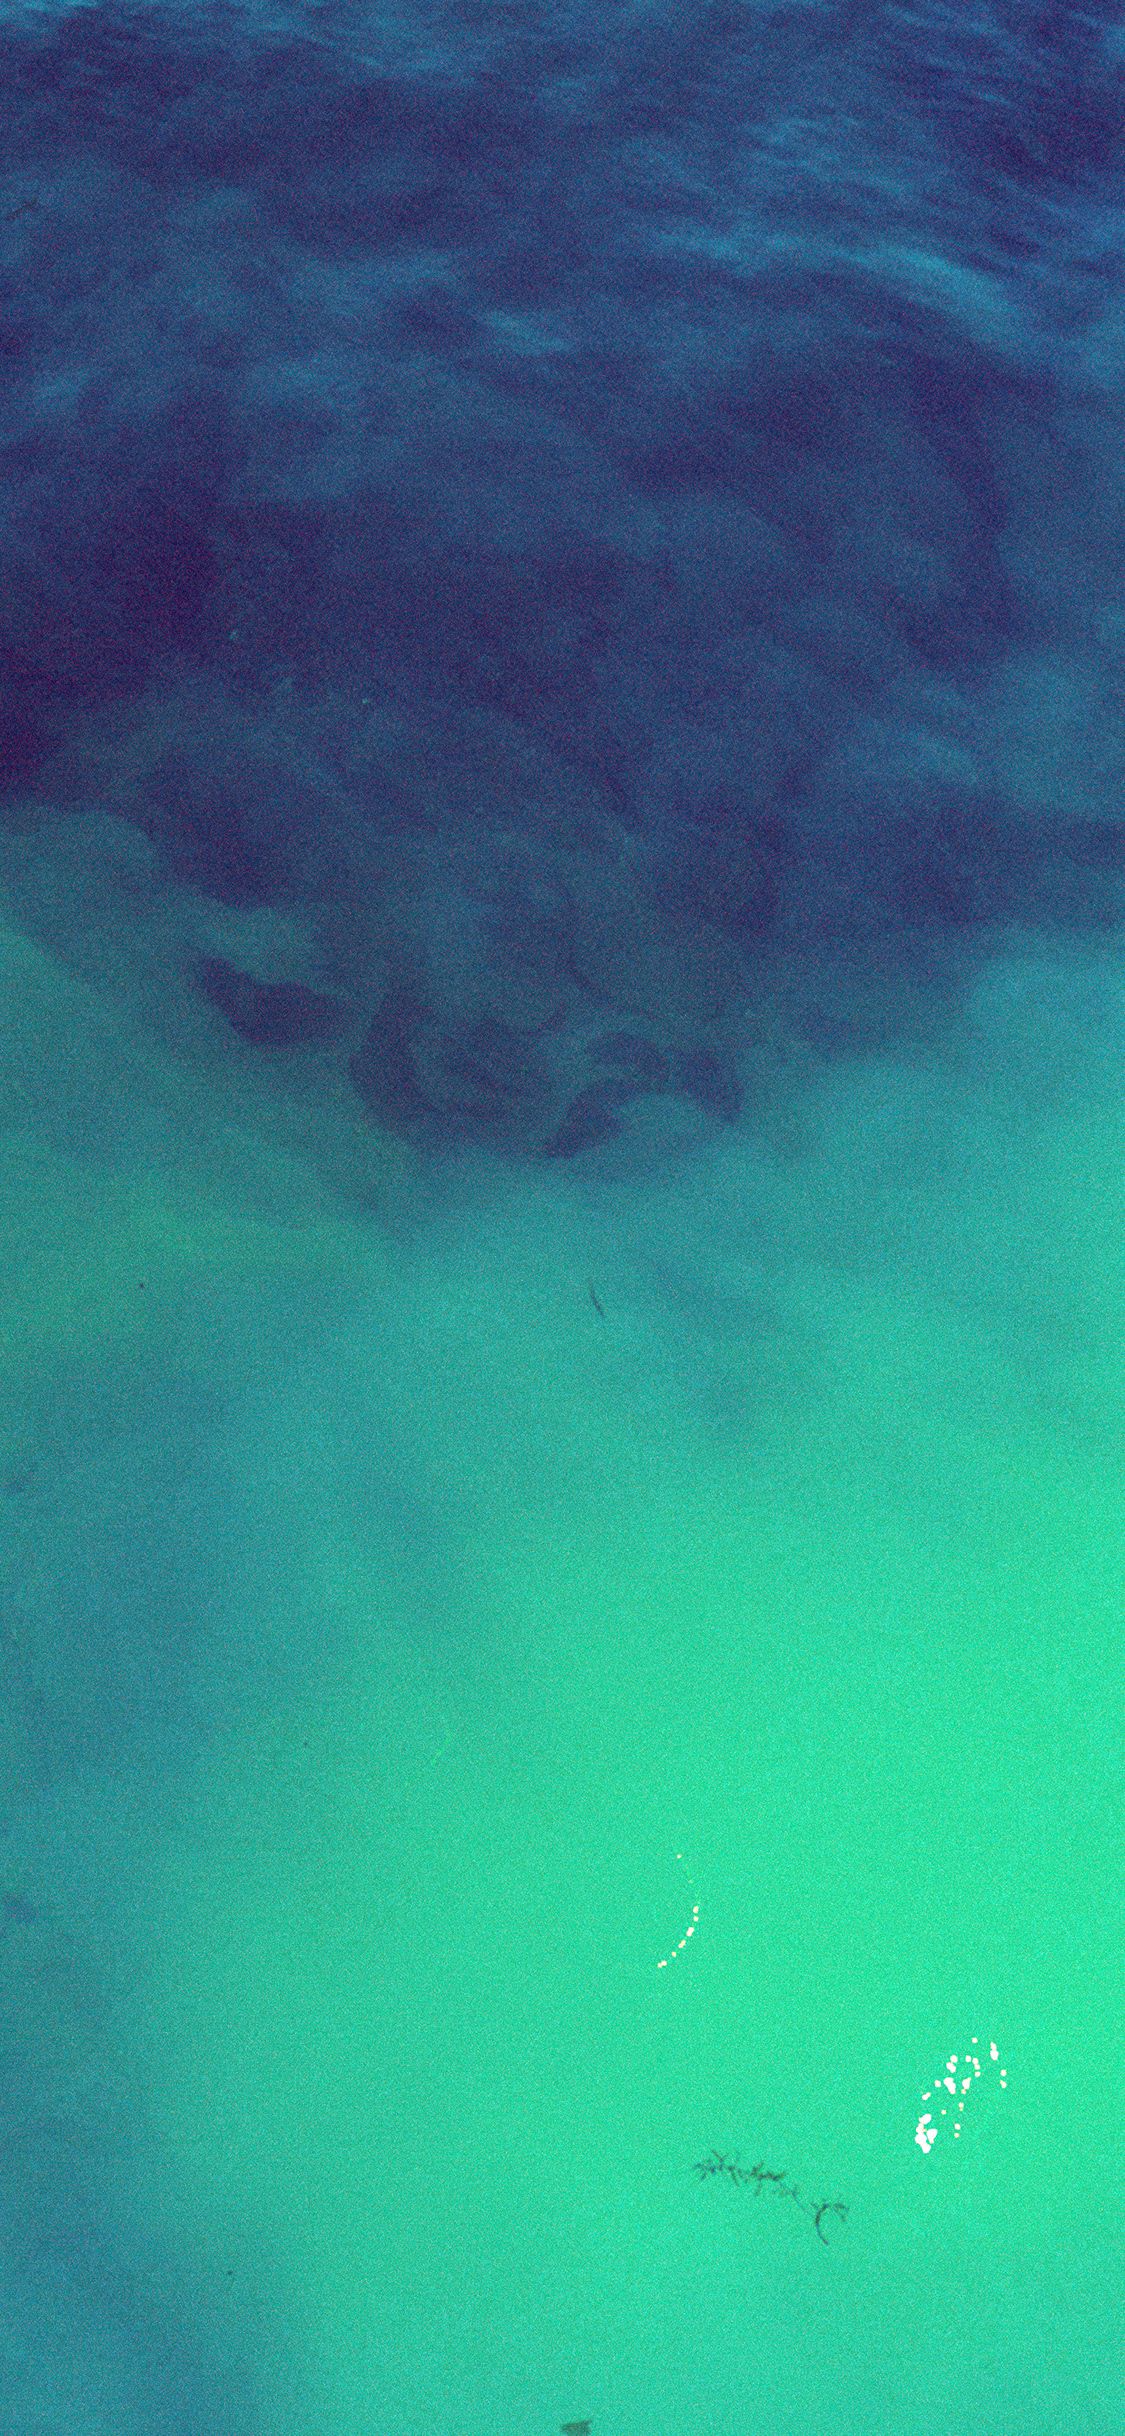 iPhone X wallpaper. blue green ocean water nature sea